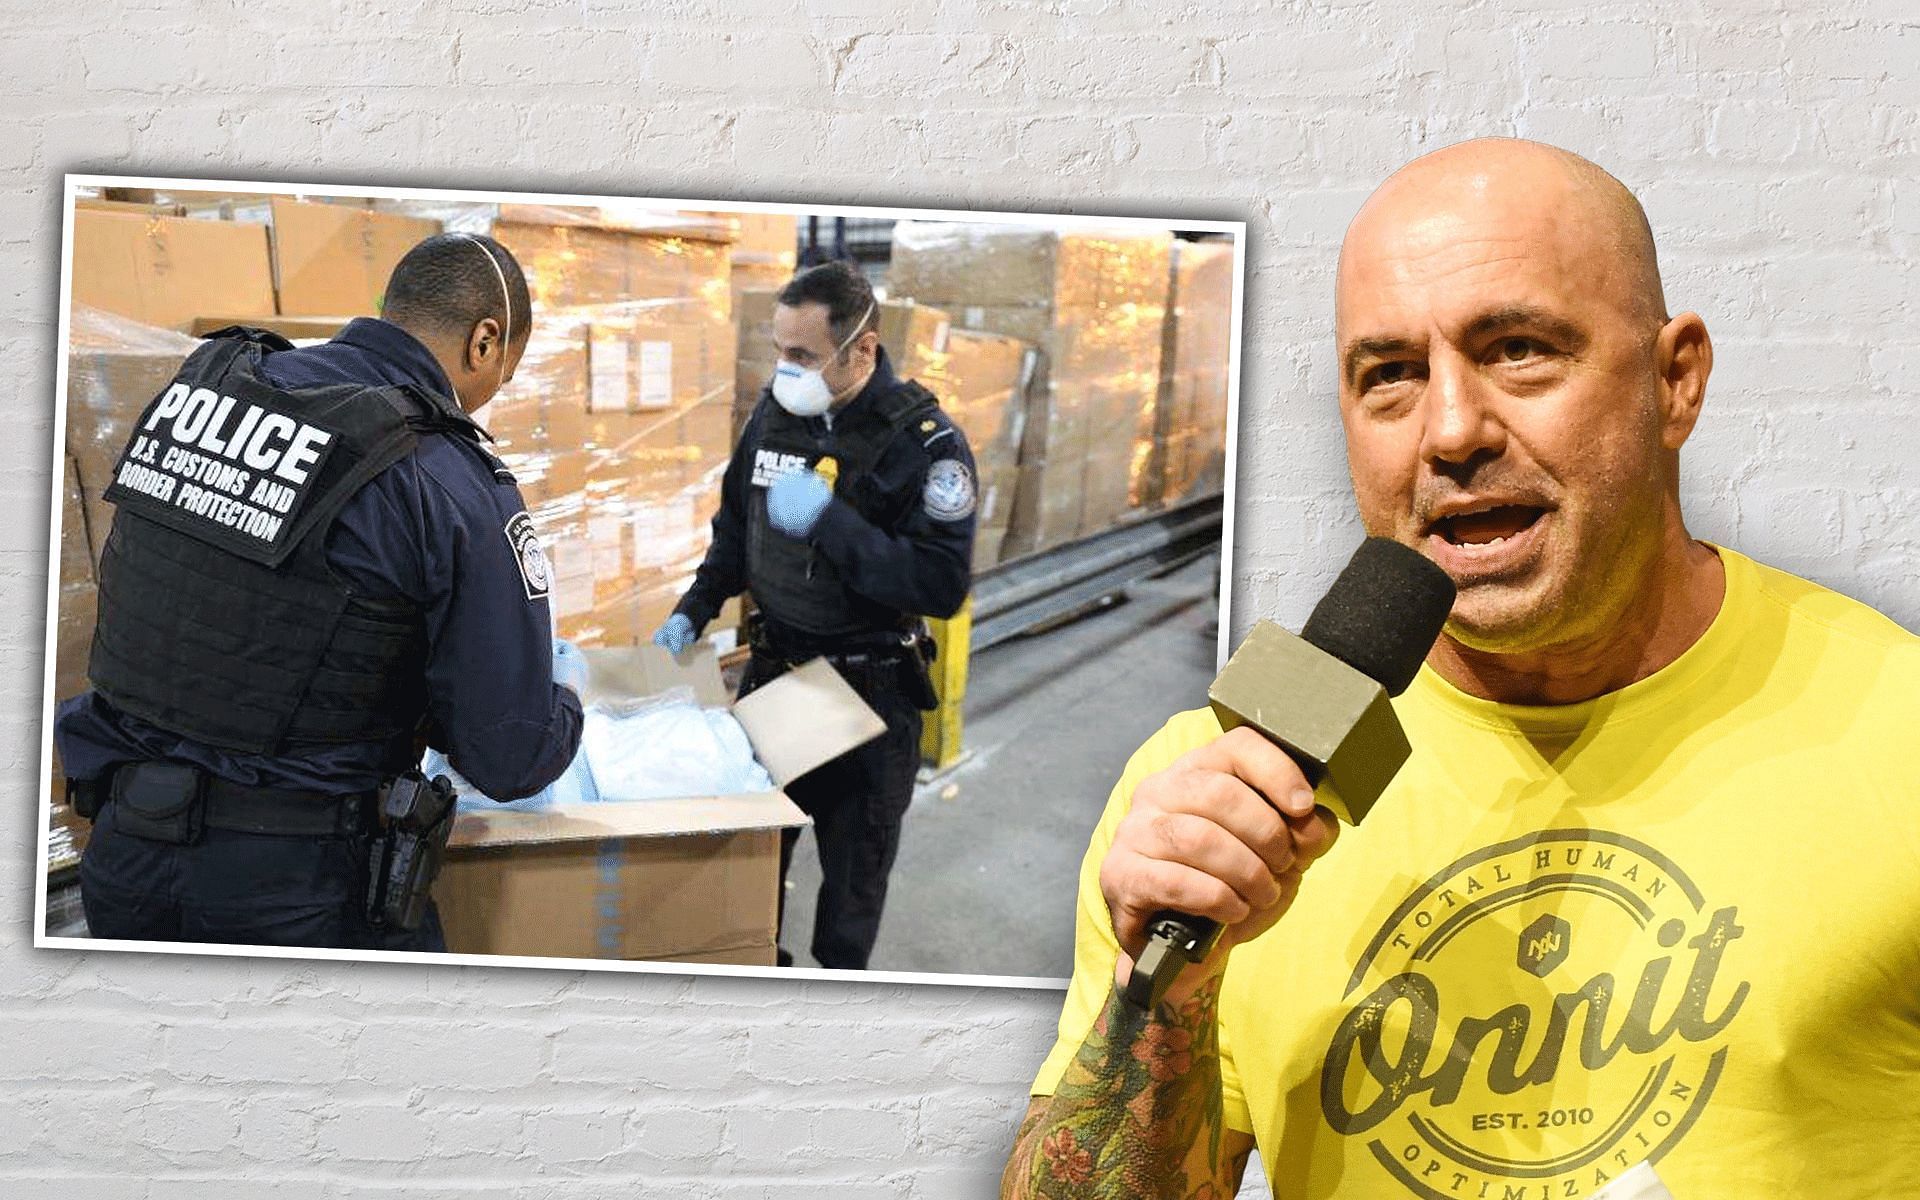 Joe Rogan reacted to U.S Customs seizing a shipment of drugs [Left image via cbp.gov]